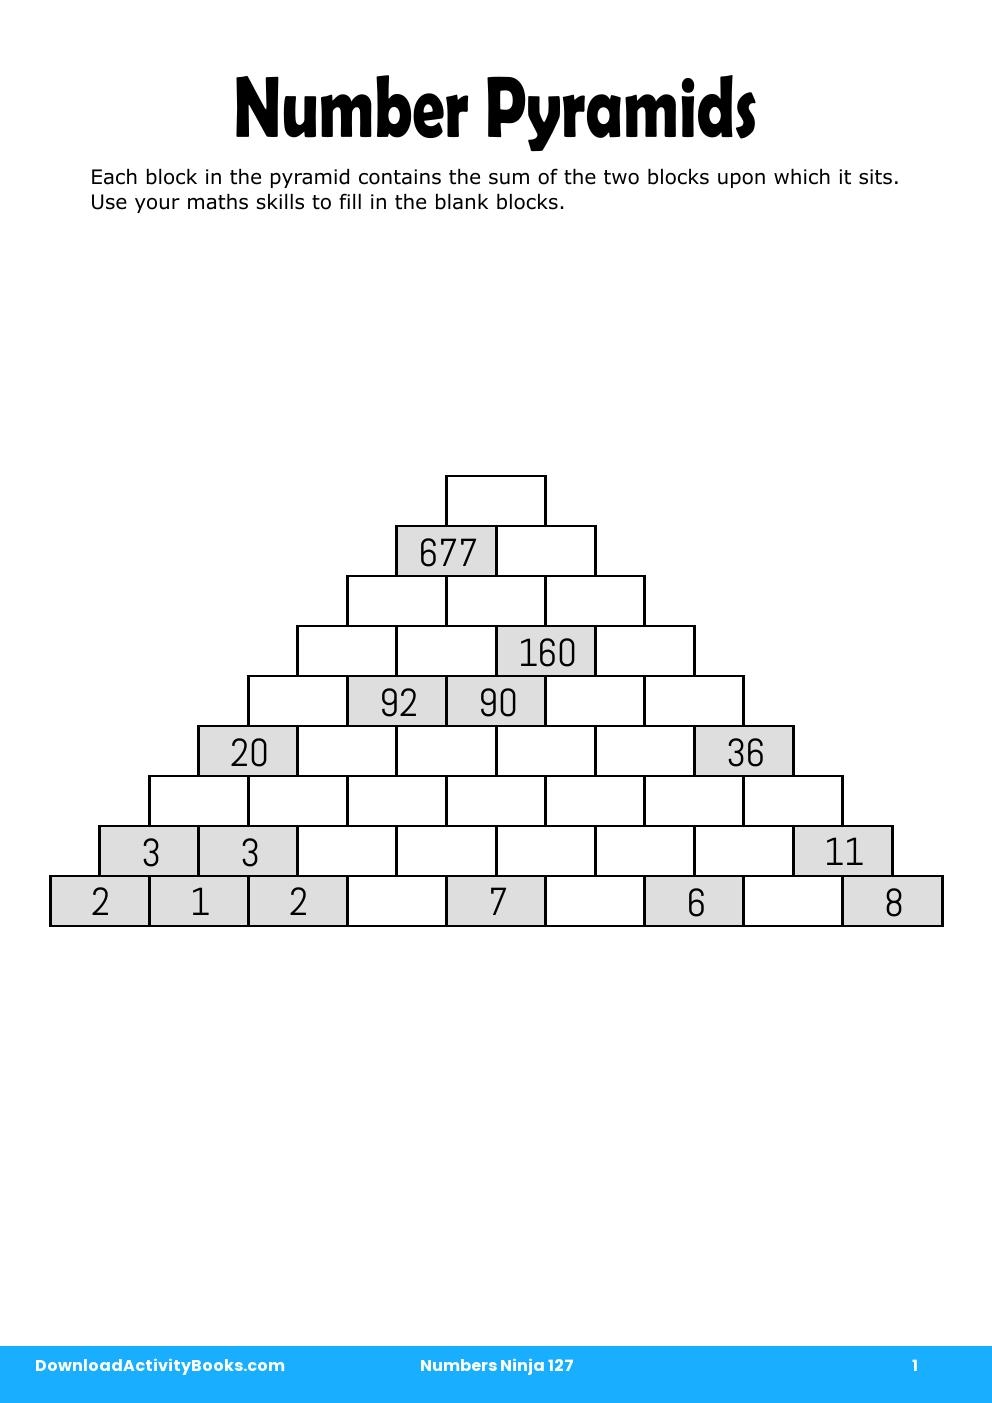 Number Pyramids in Numbers Ninja 127